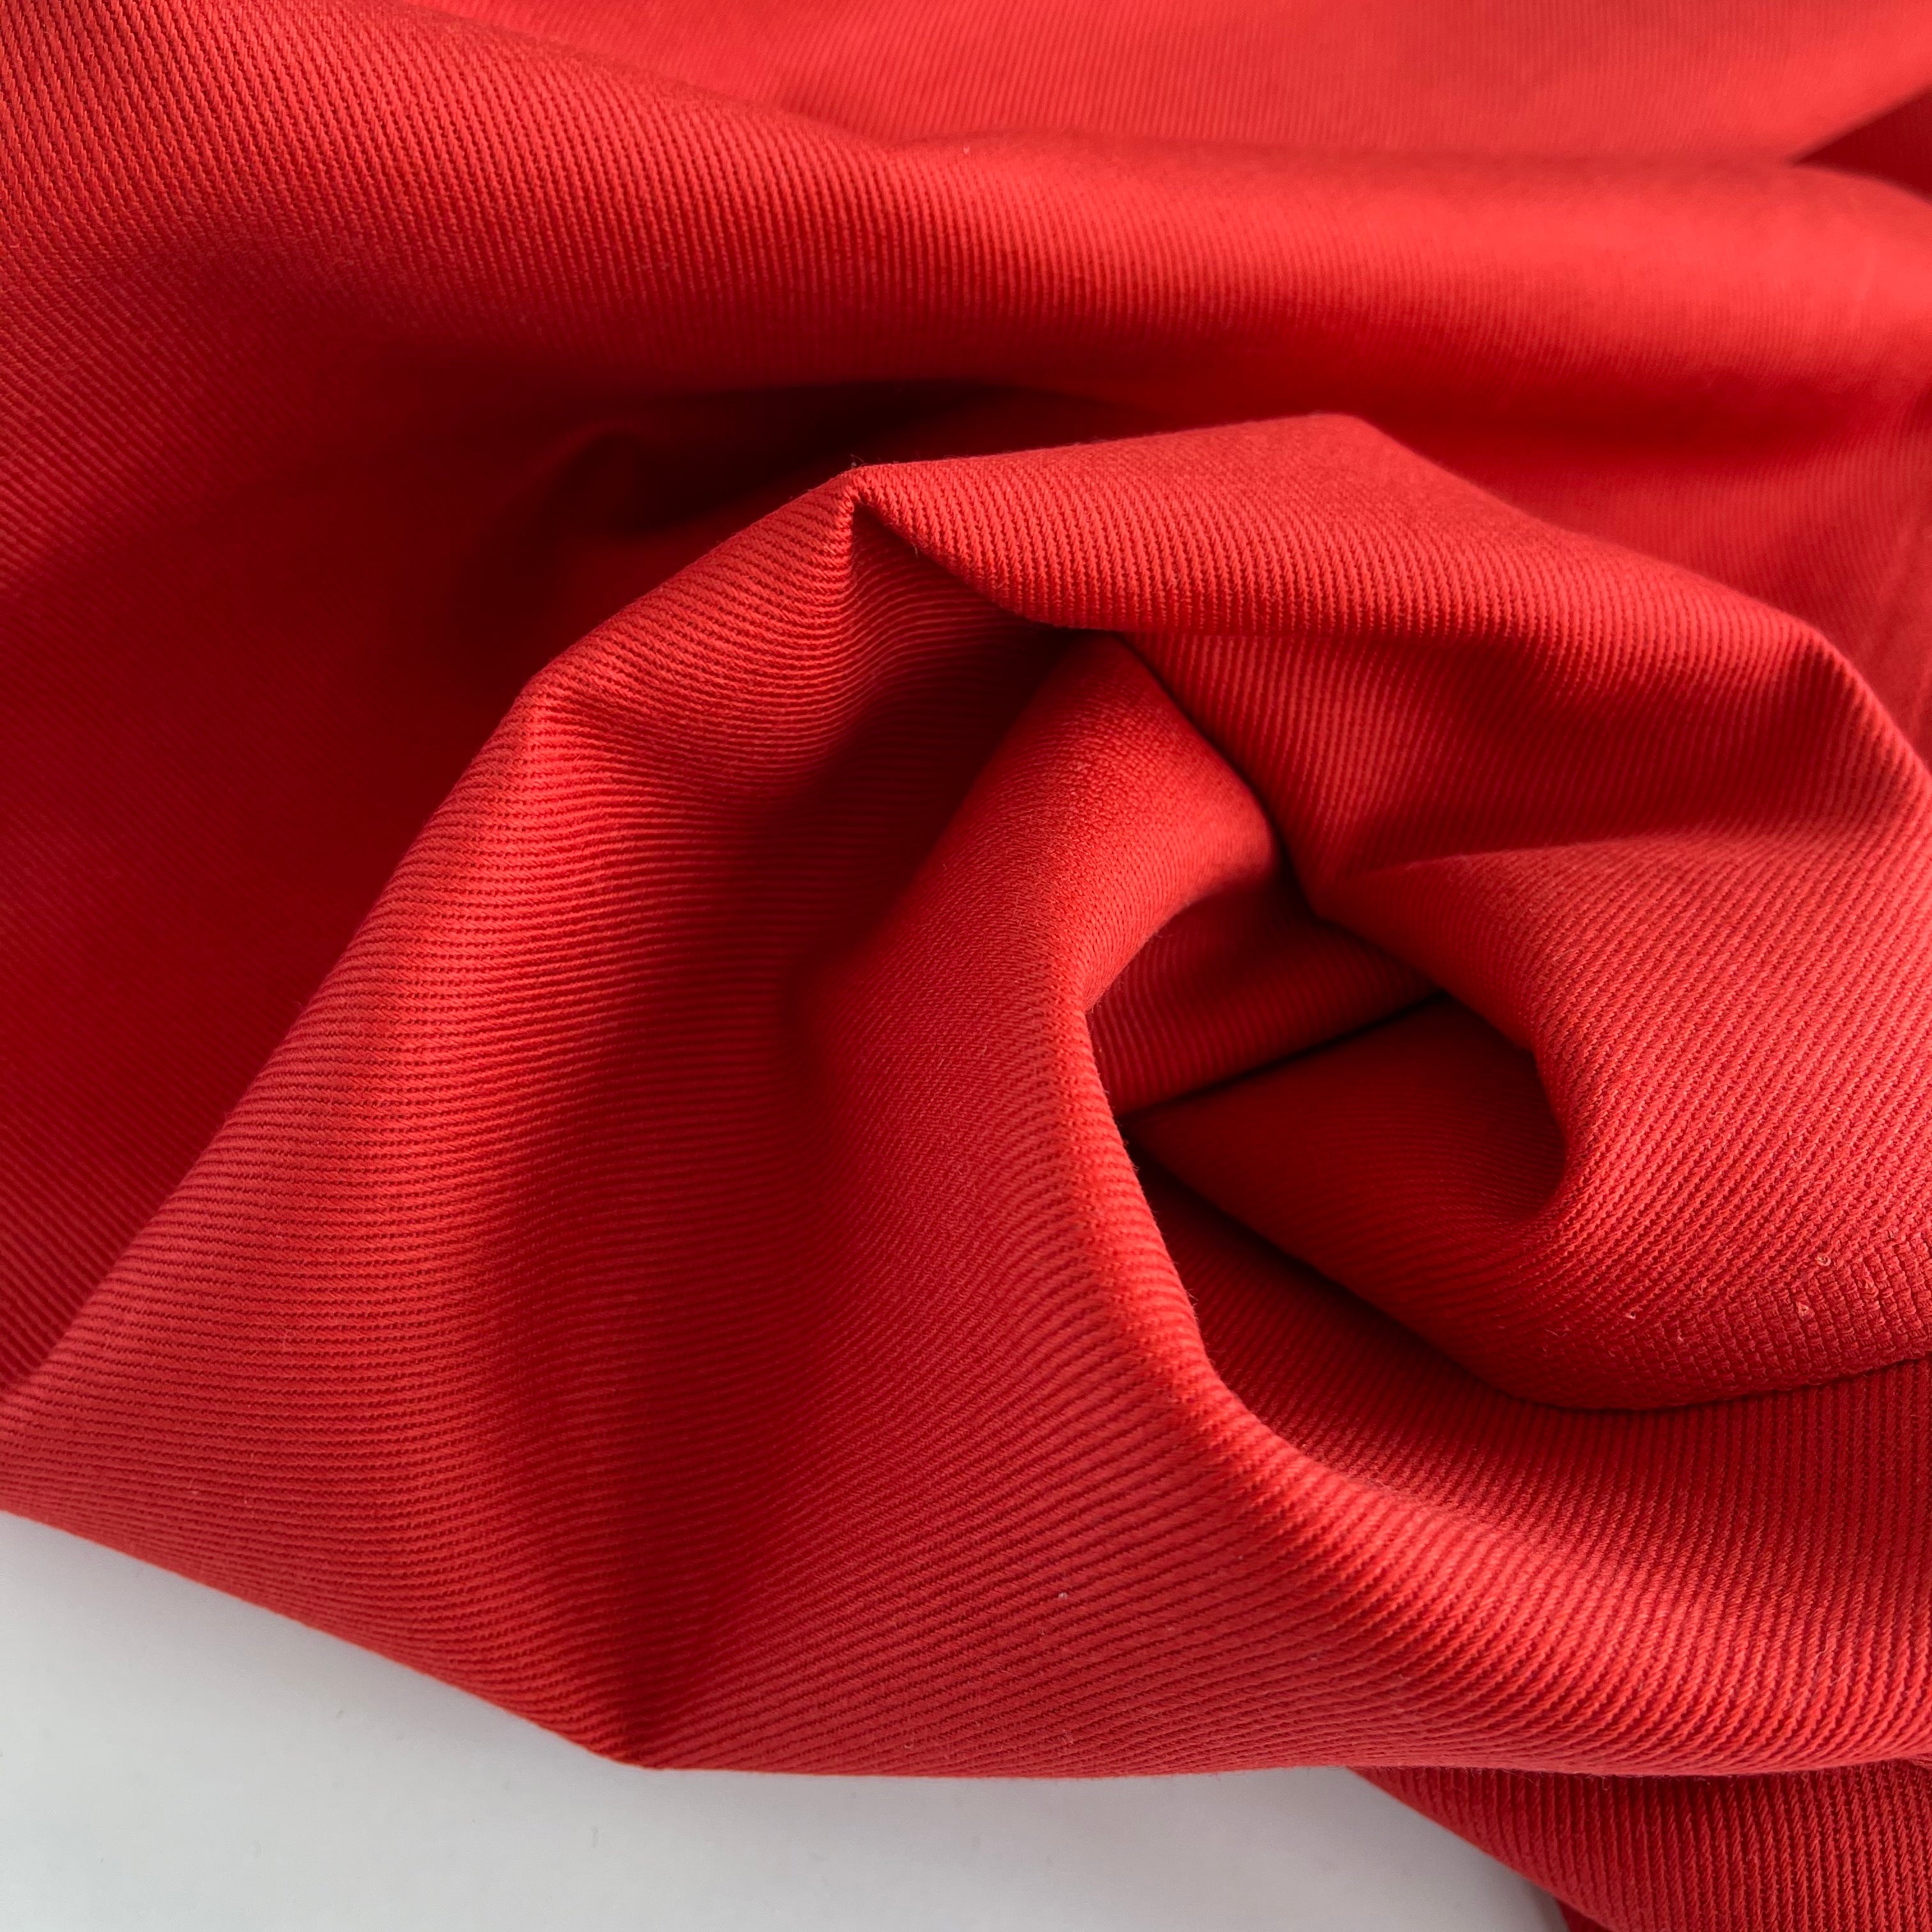 REMNANT 2.08 Meters - Robert Kaufman - Red (Garnet Brown) Ventana Cotton Twill Fabric